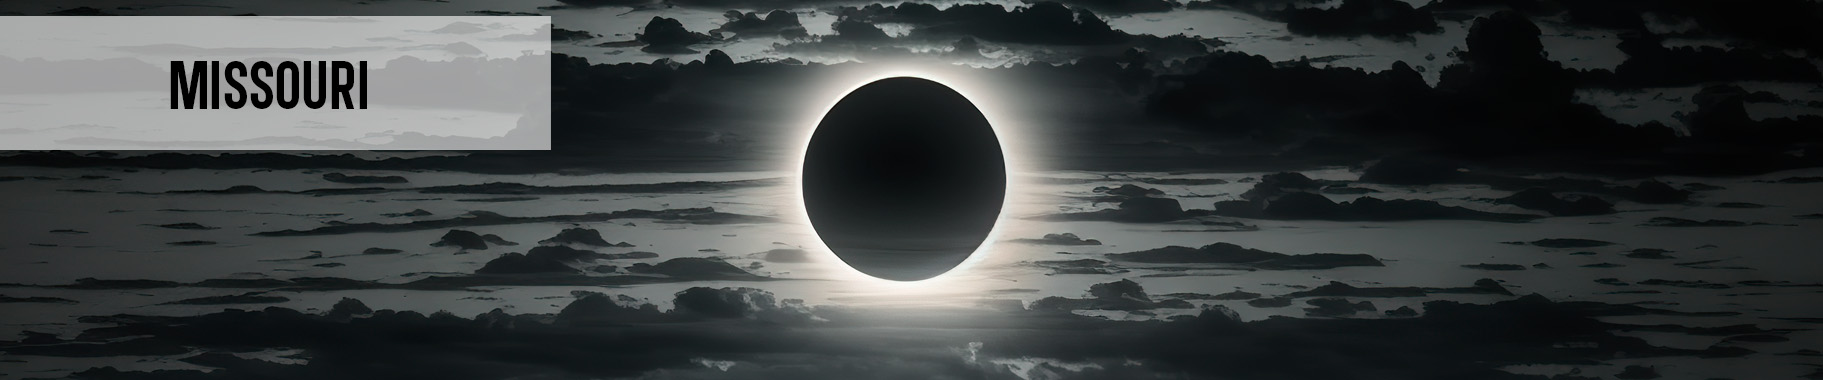 Solar Eclipse Totality Destinations in Missouri